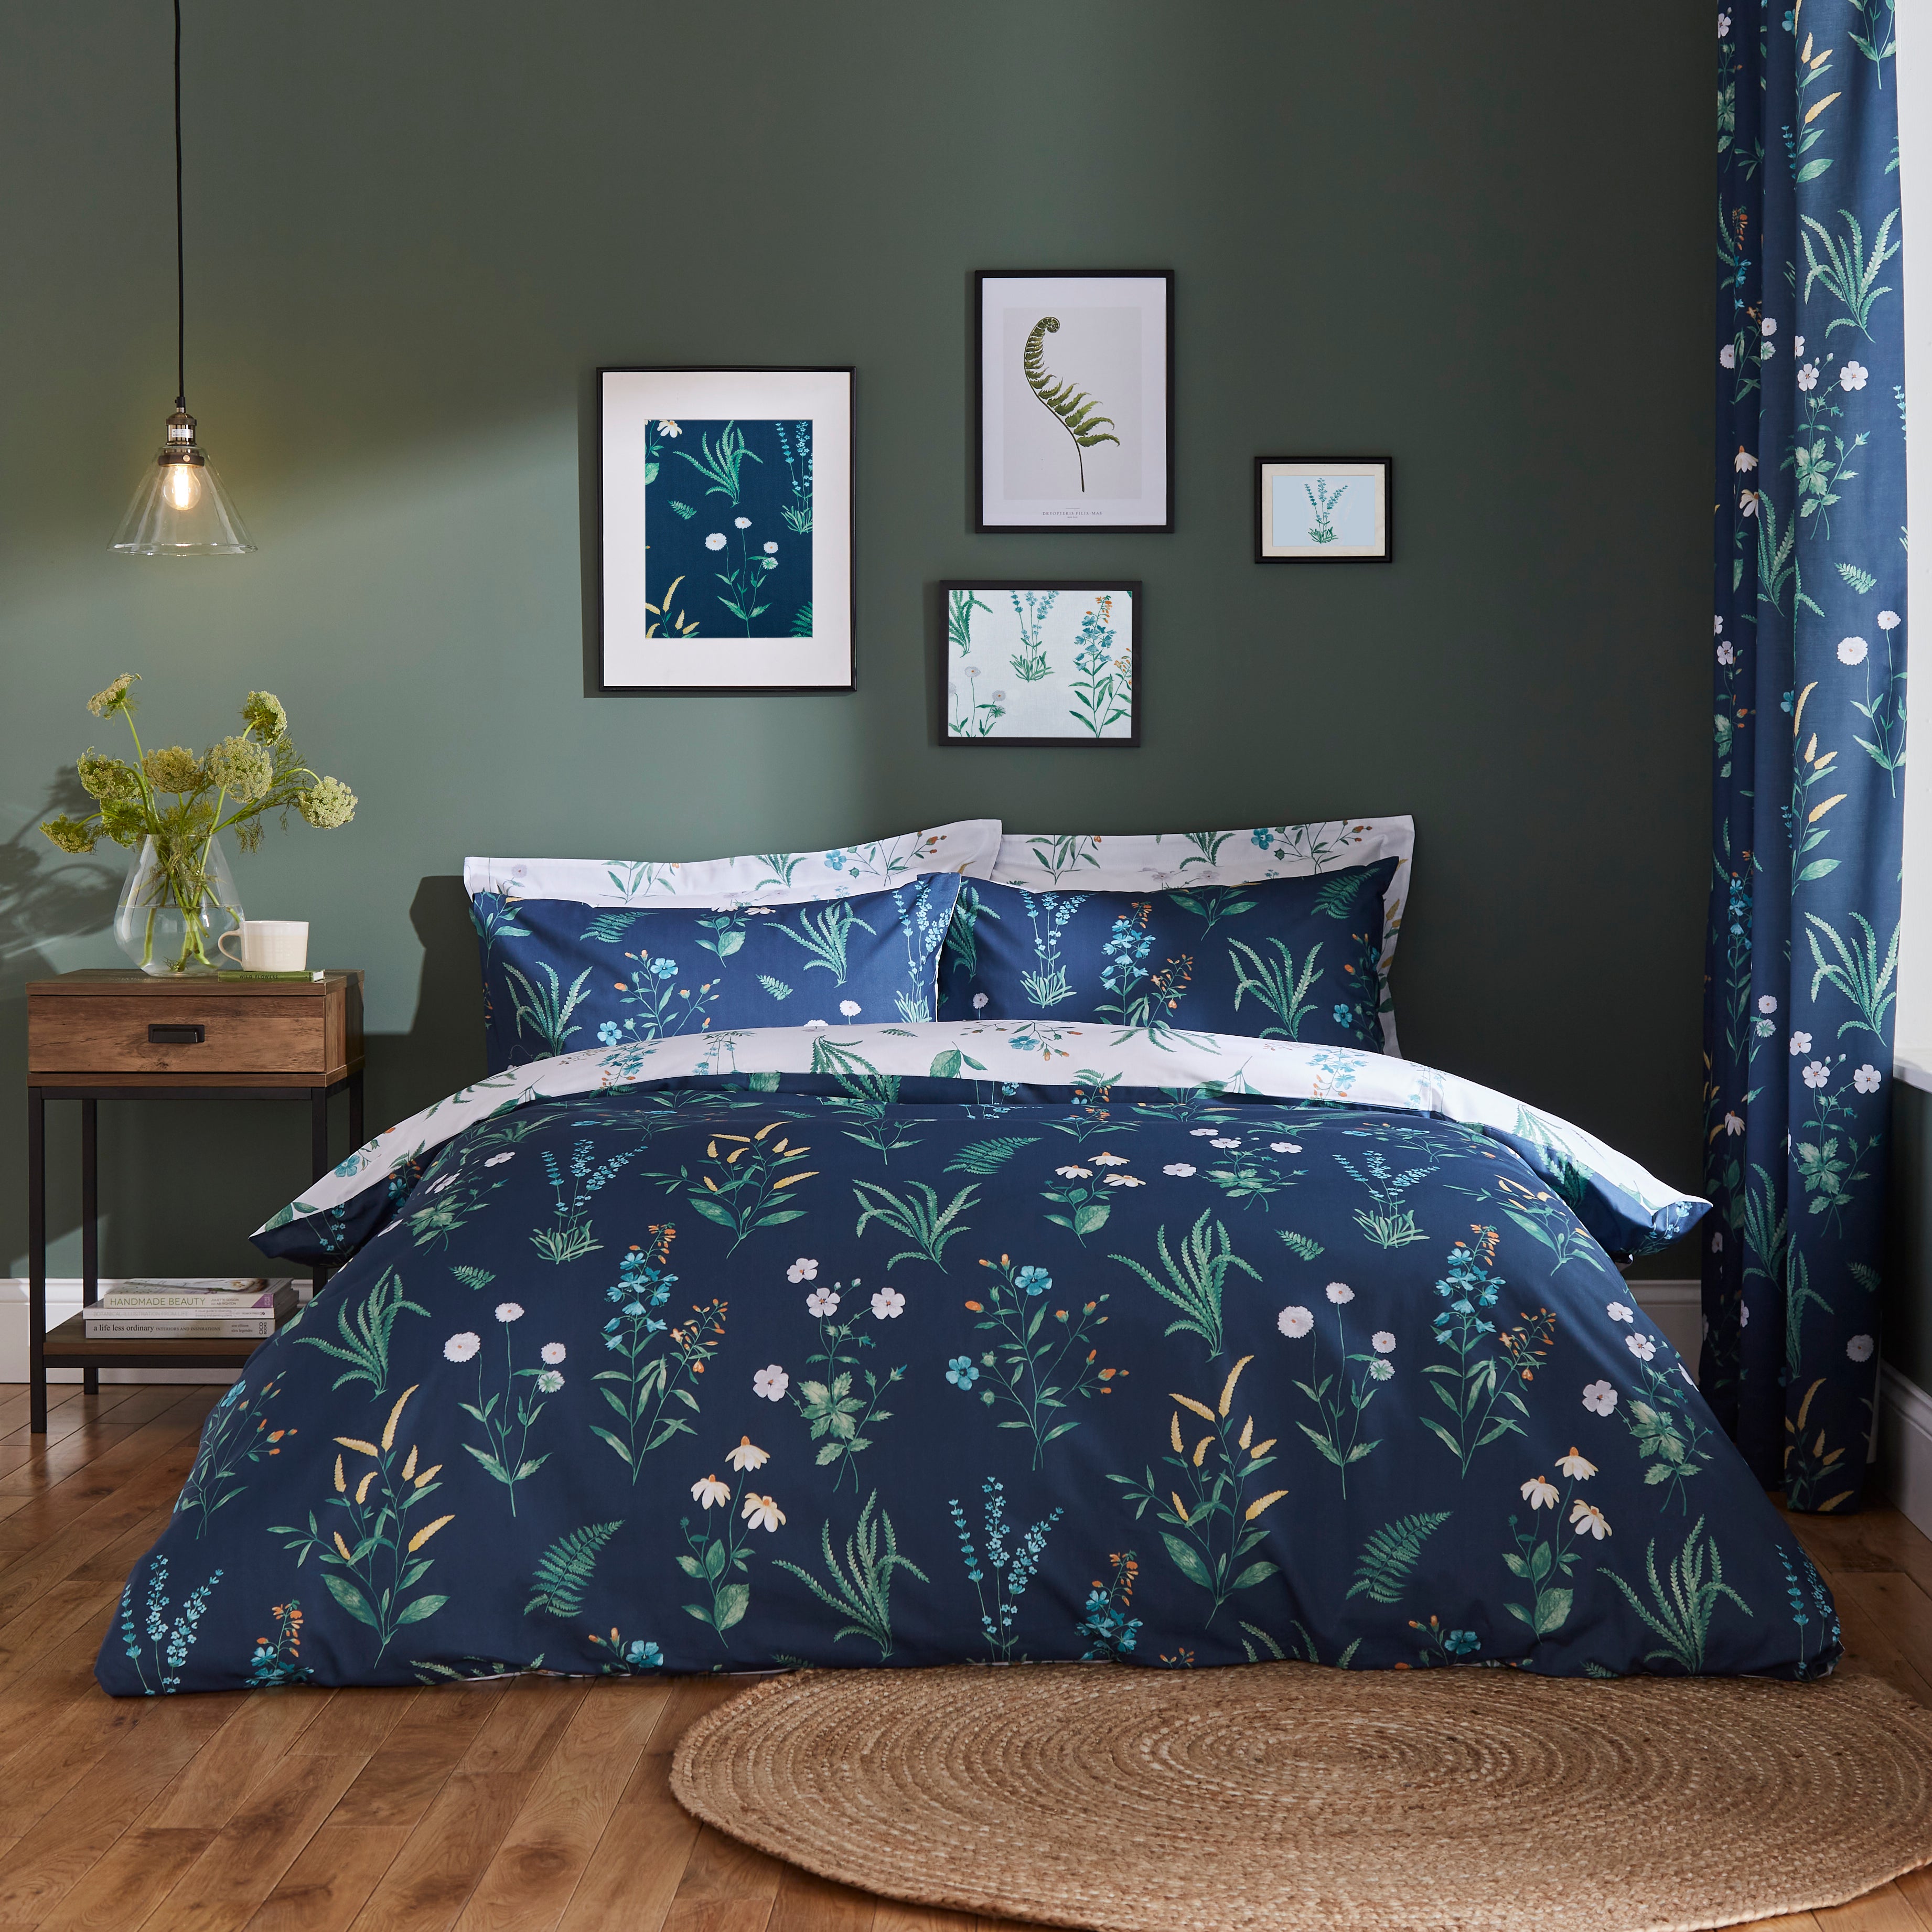 Garden Botanical Navy Duvet Cover And Pillowcase Set Navy Bluegreen